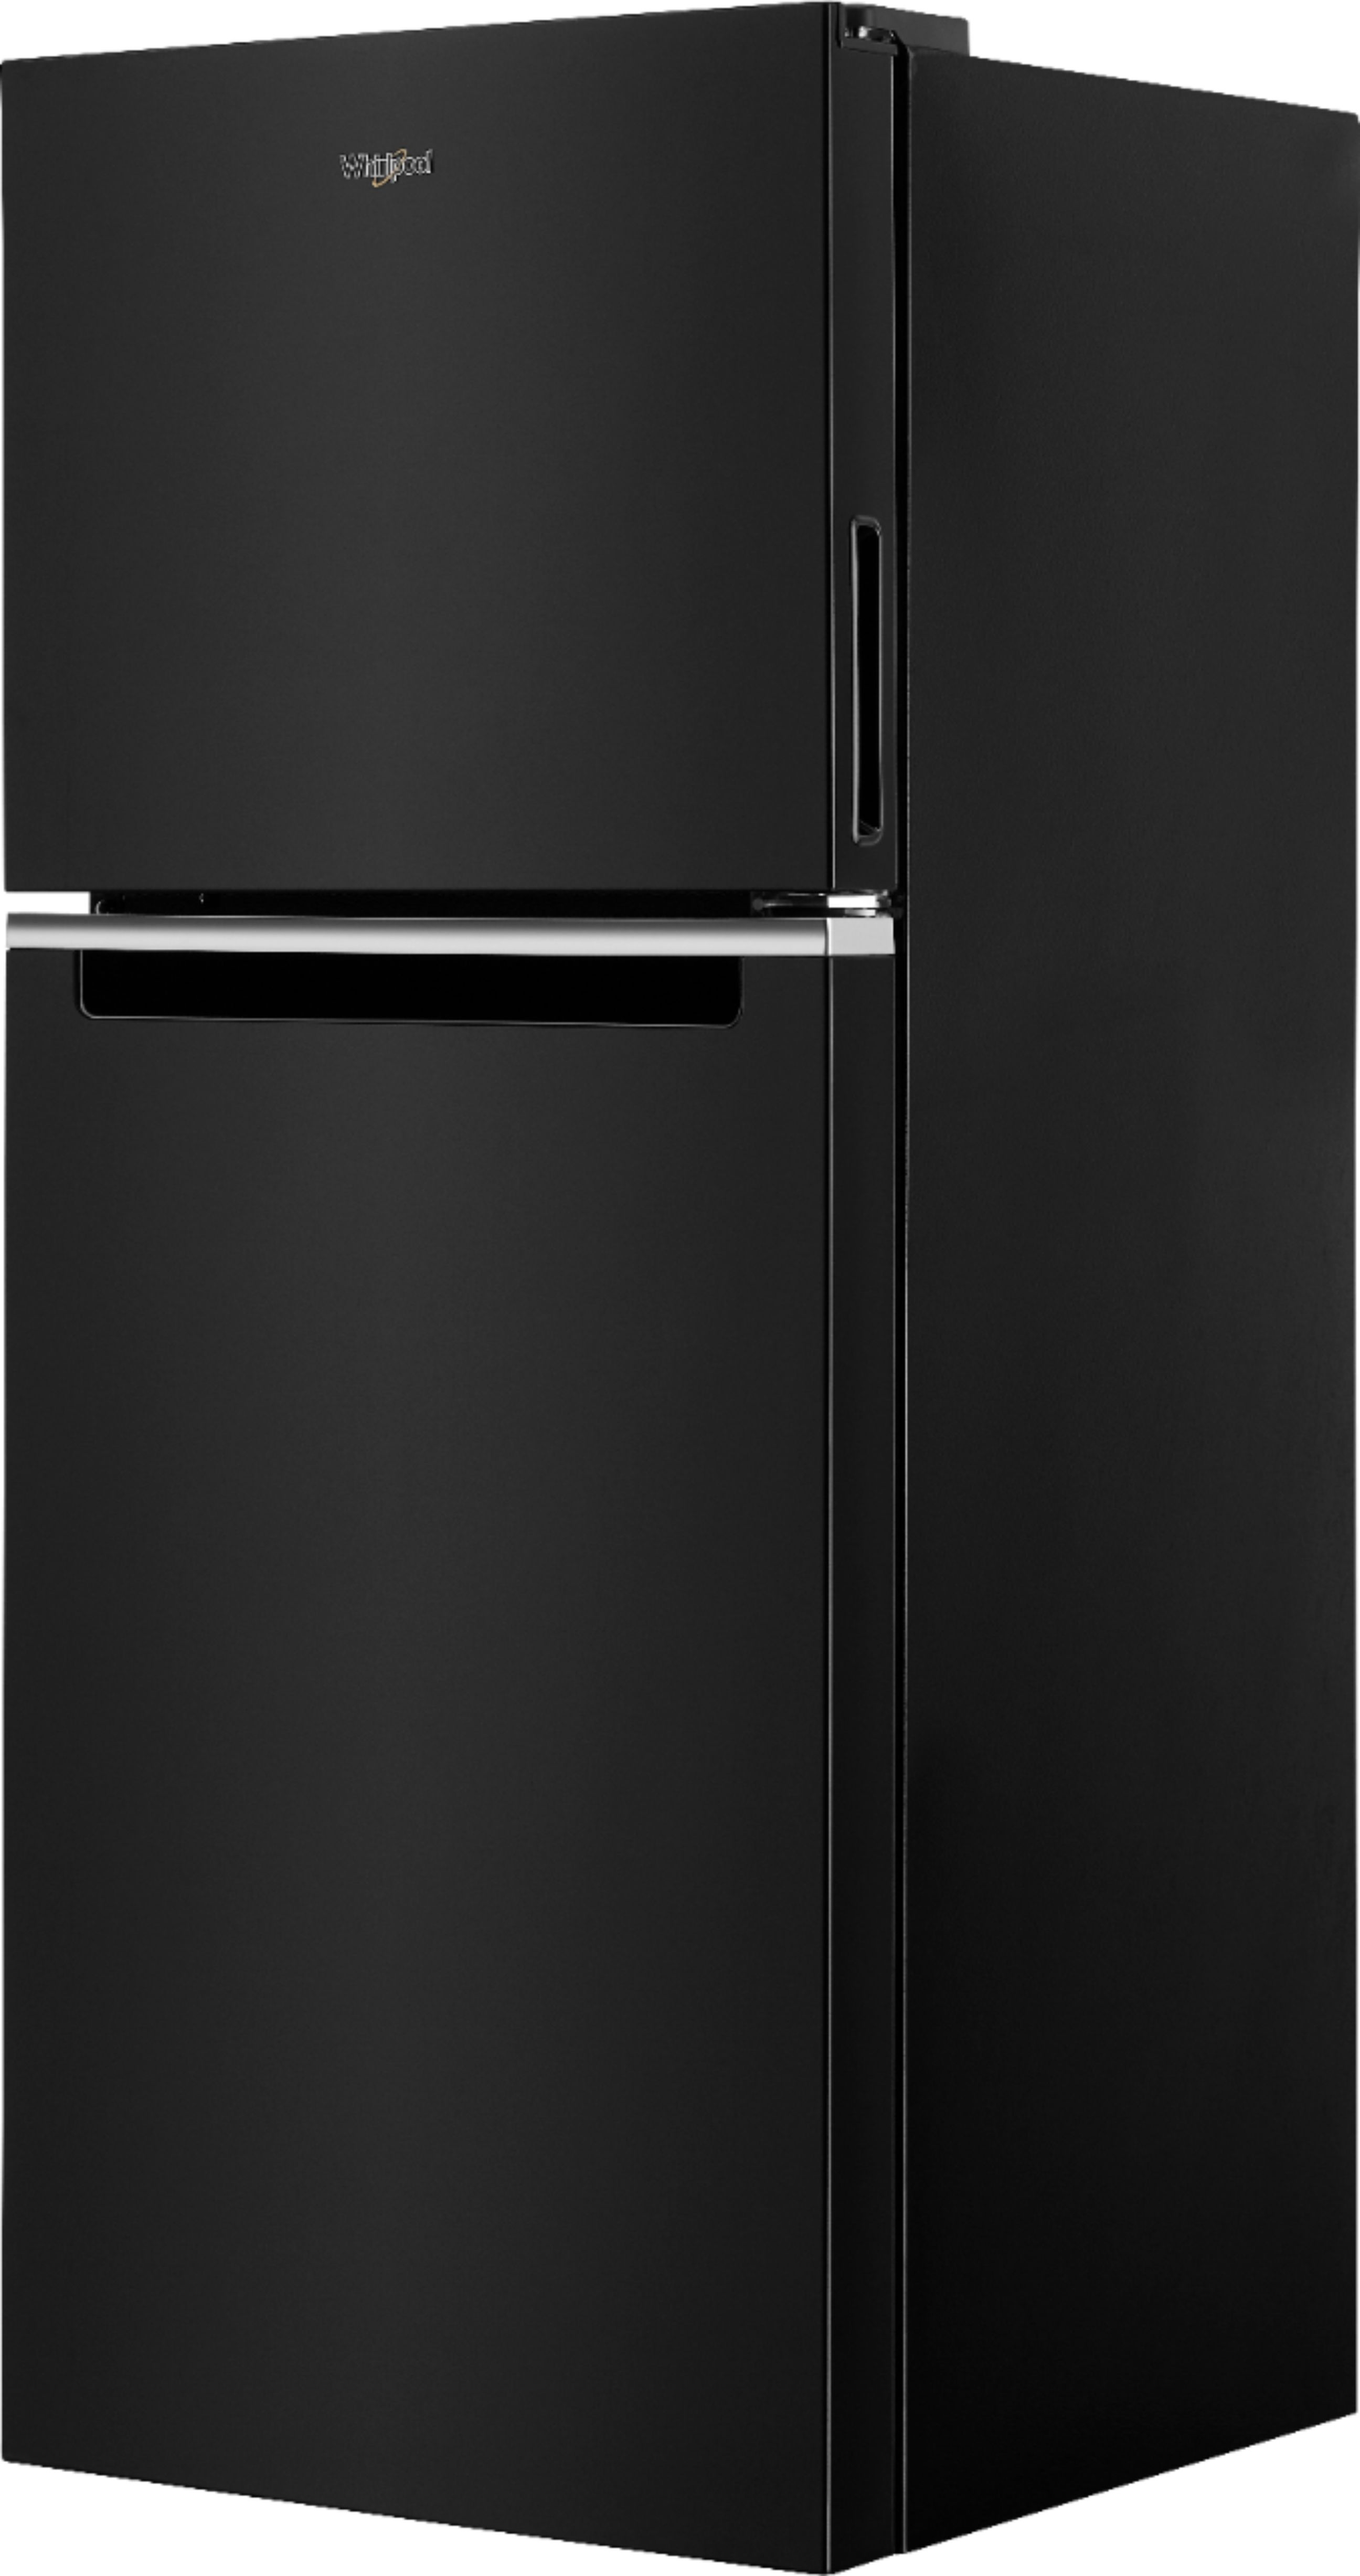 Left View: Whirlpool - 17.7 Cu. Ft. Top-Freezer Refrigerator - Monochromatic Stainless Steel